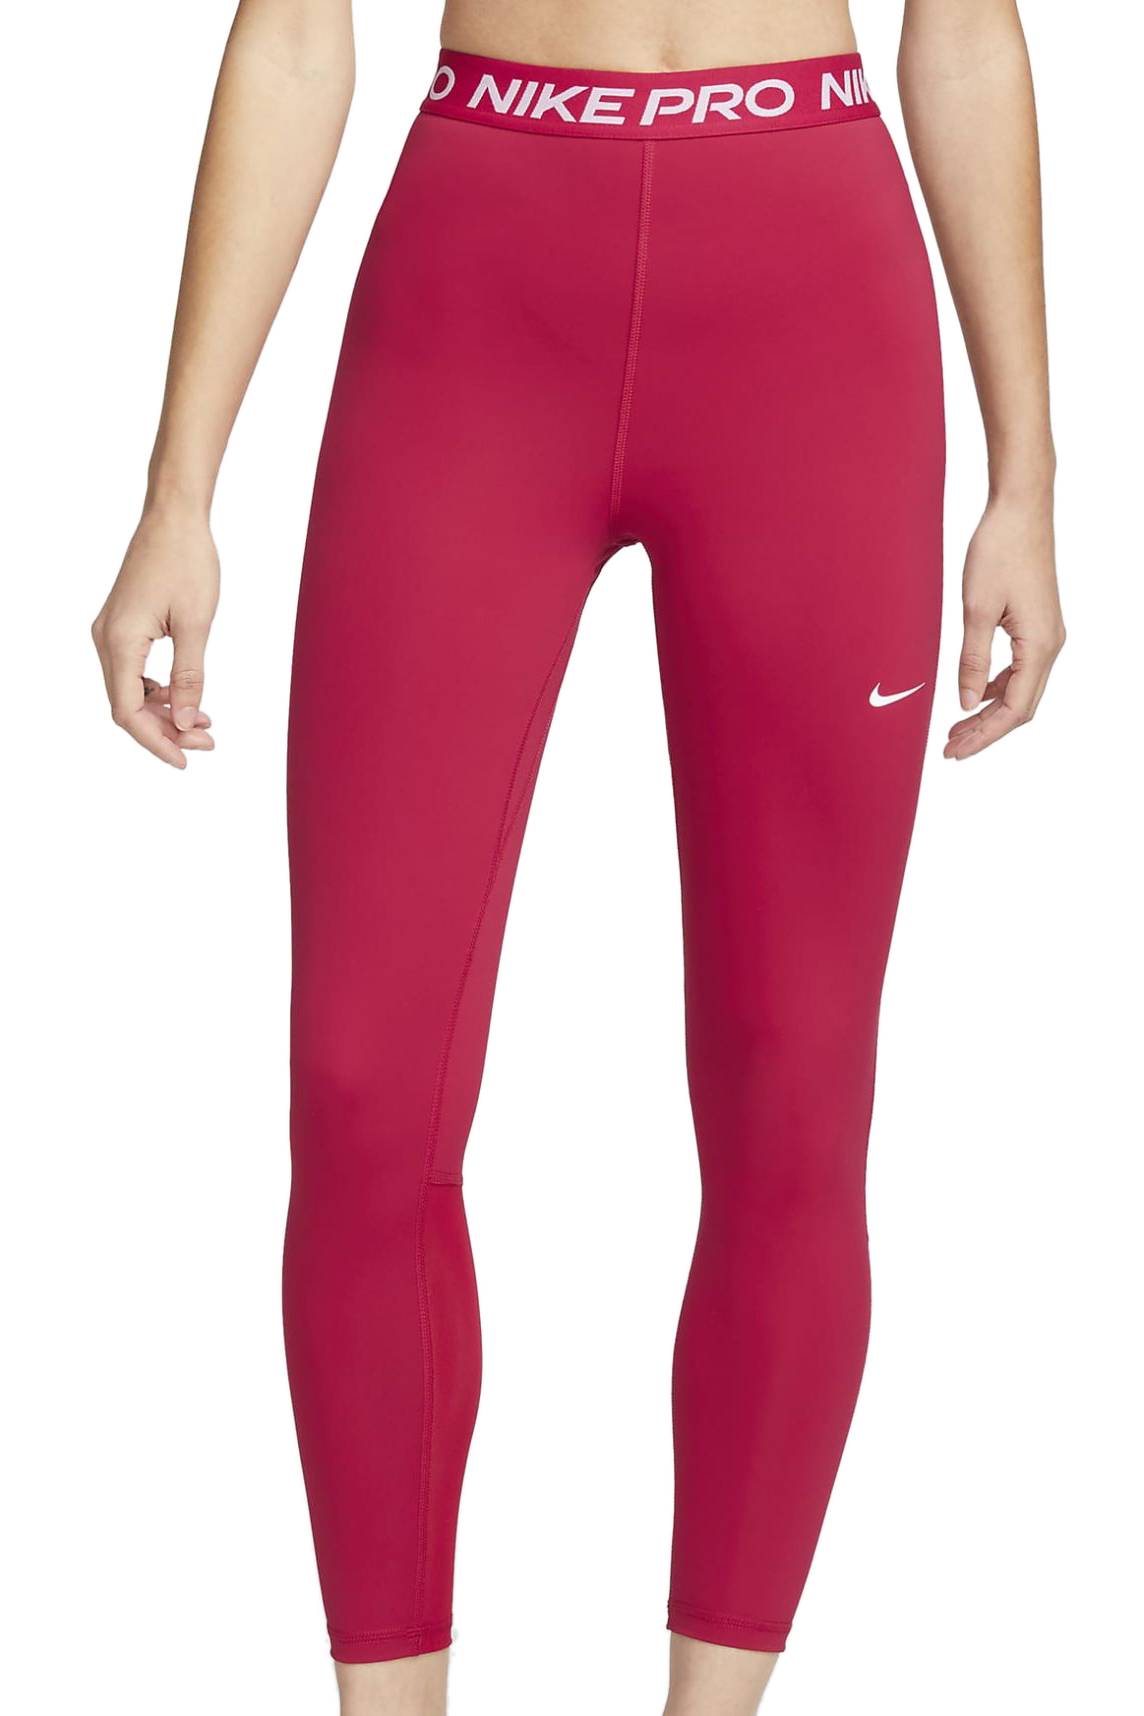 Women's leggings Nike Pro 365 Tight 7/8 Hi Rise W - mystic hibiscus/white, Tennis Zone